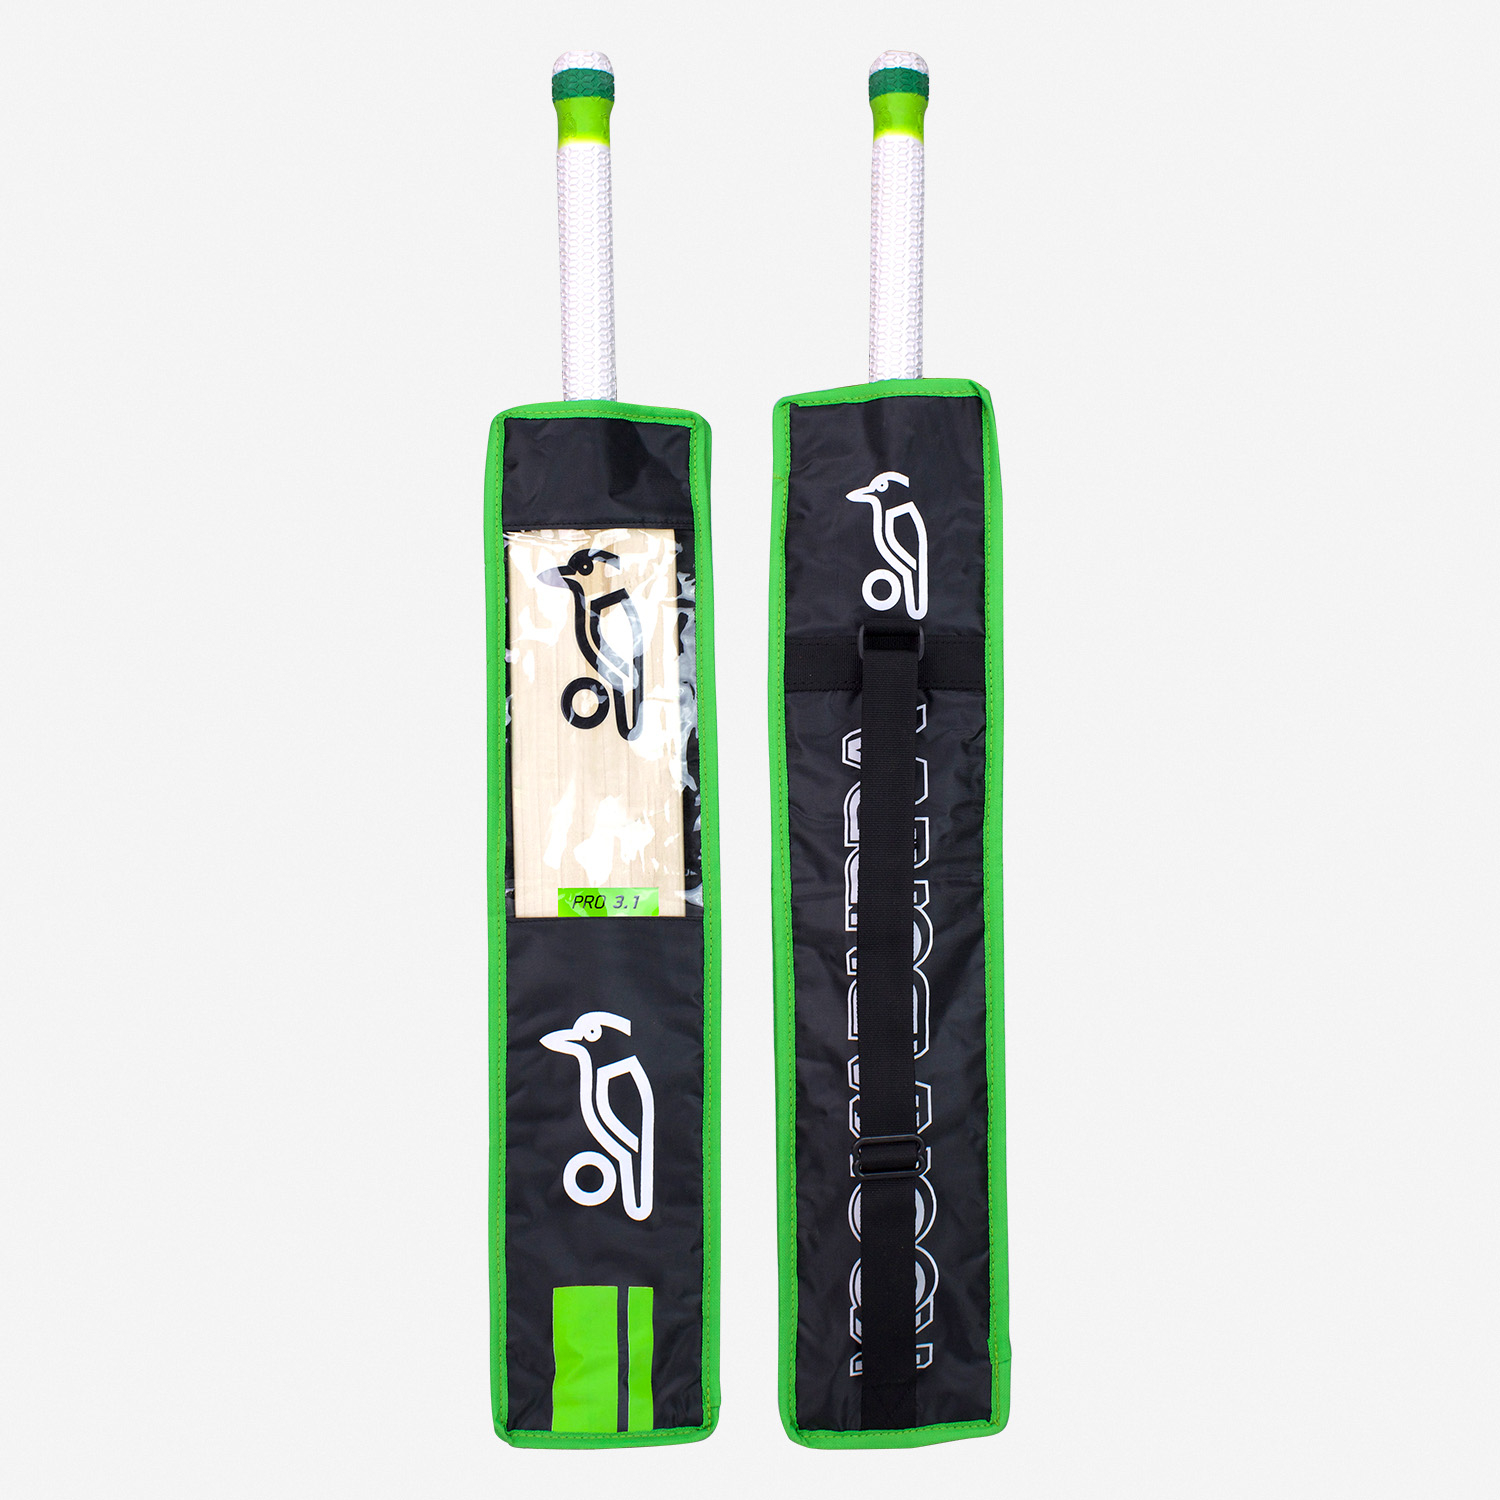 Pro 3.1 Cricket Bat Cover back